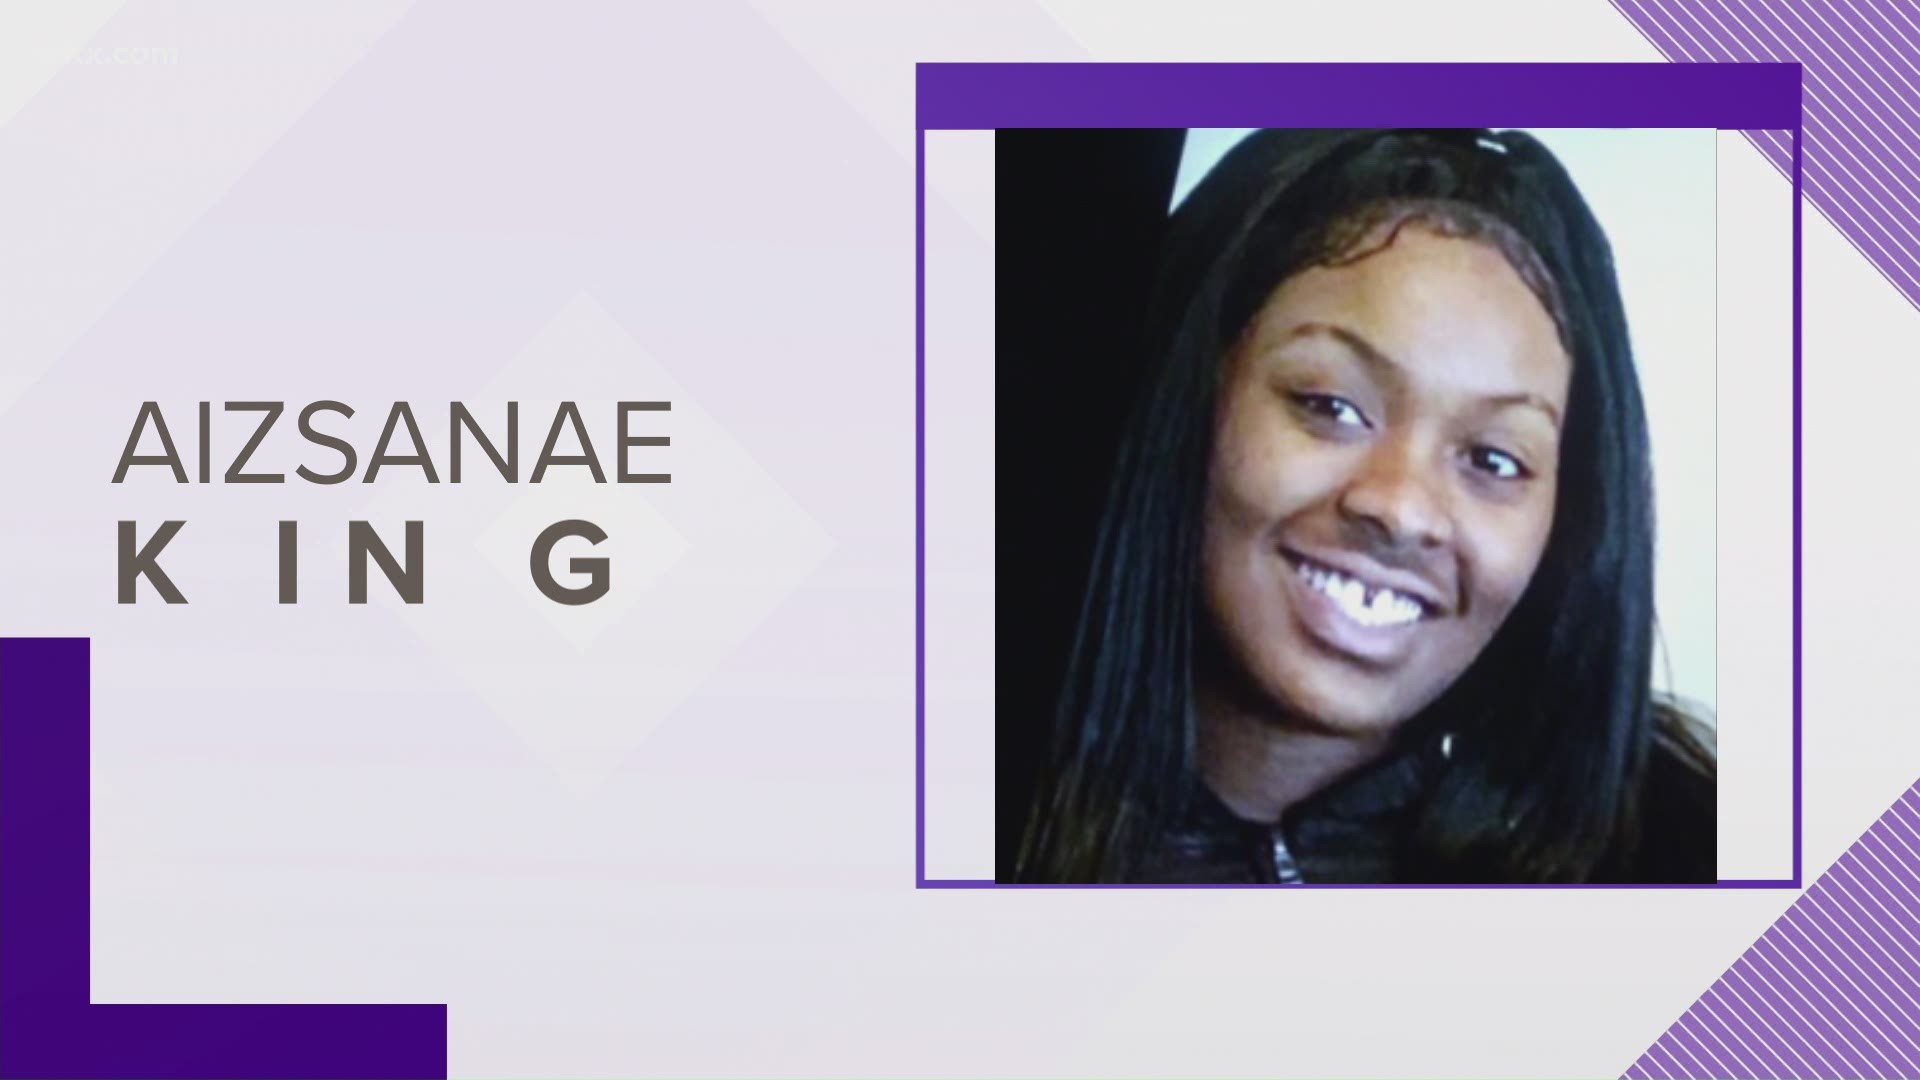 Aizsanae King was last seen around 2 p.m. Sunday, Jan. 17, on Janice Court in Bishopville.